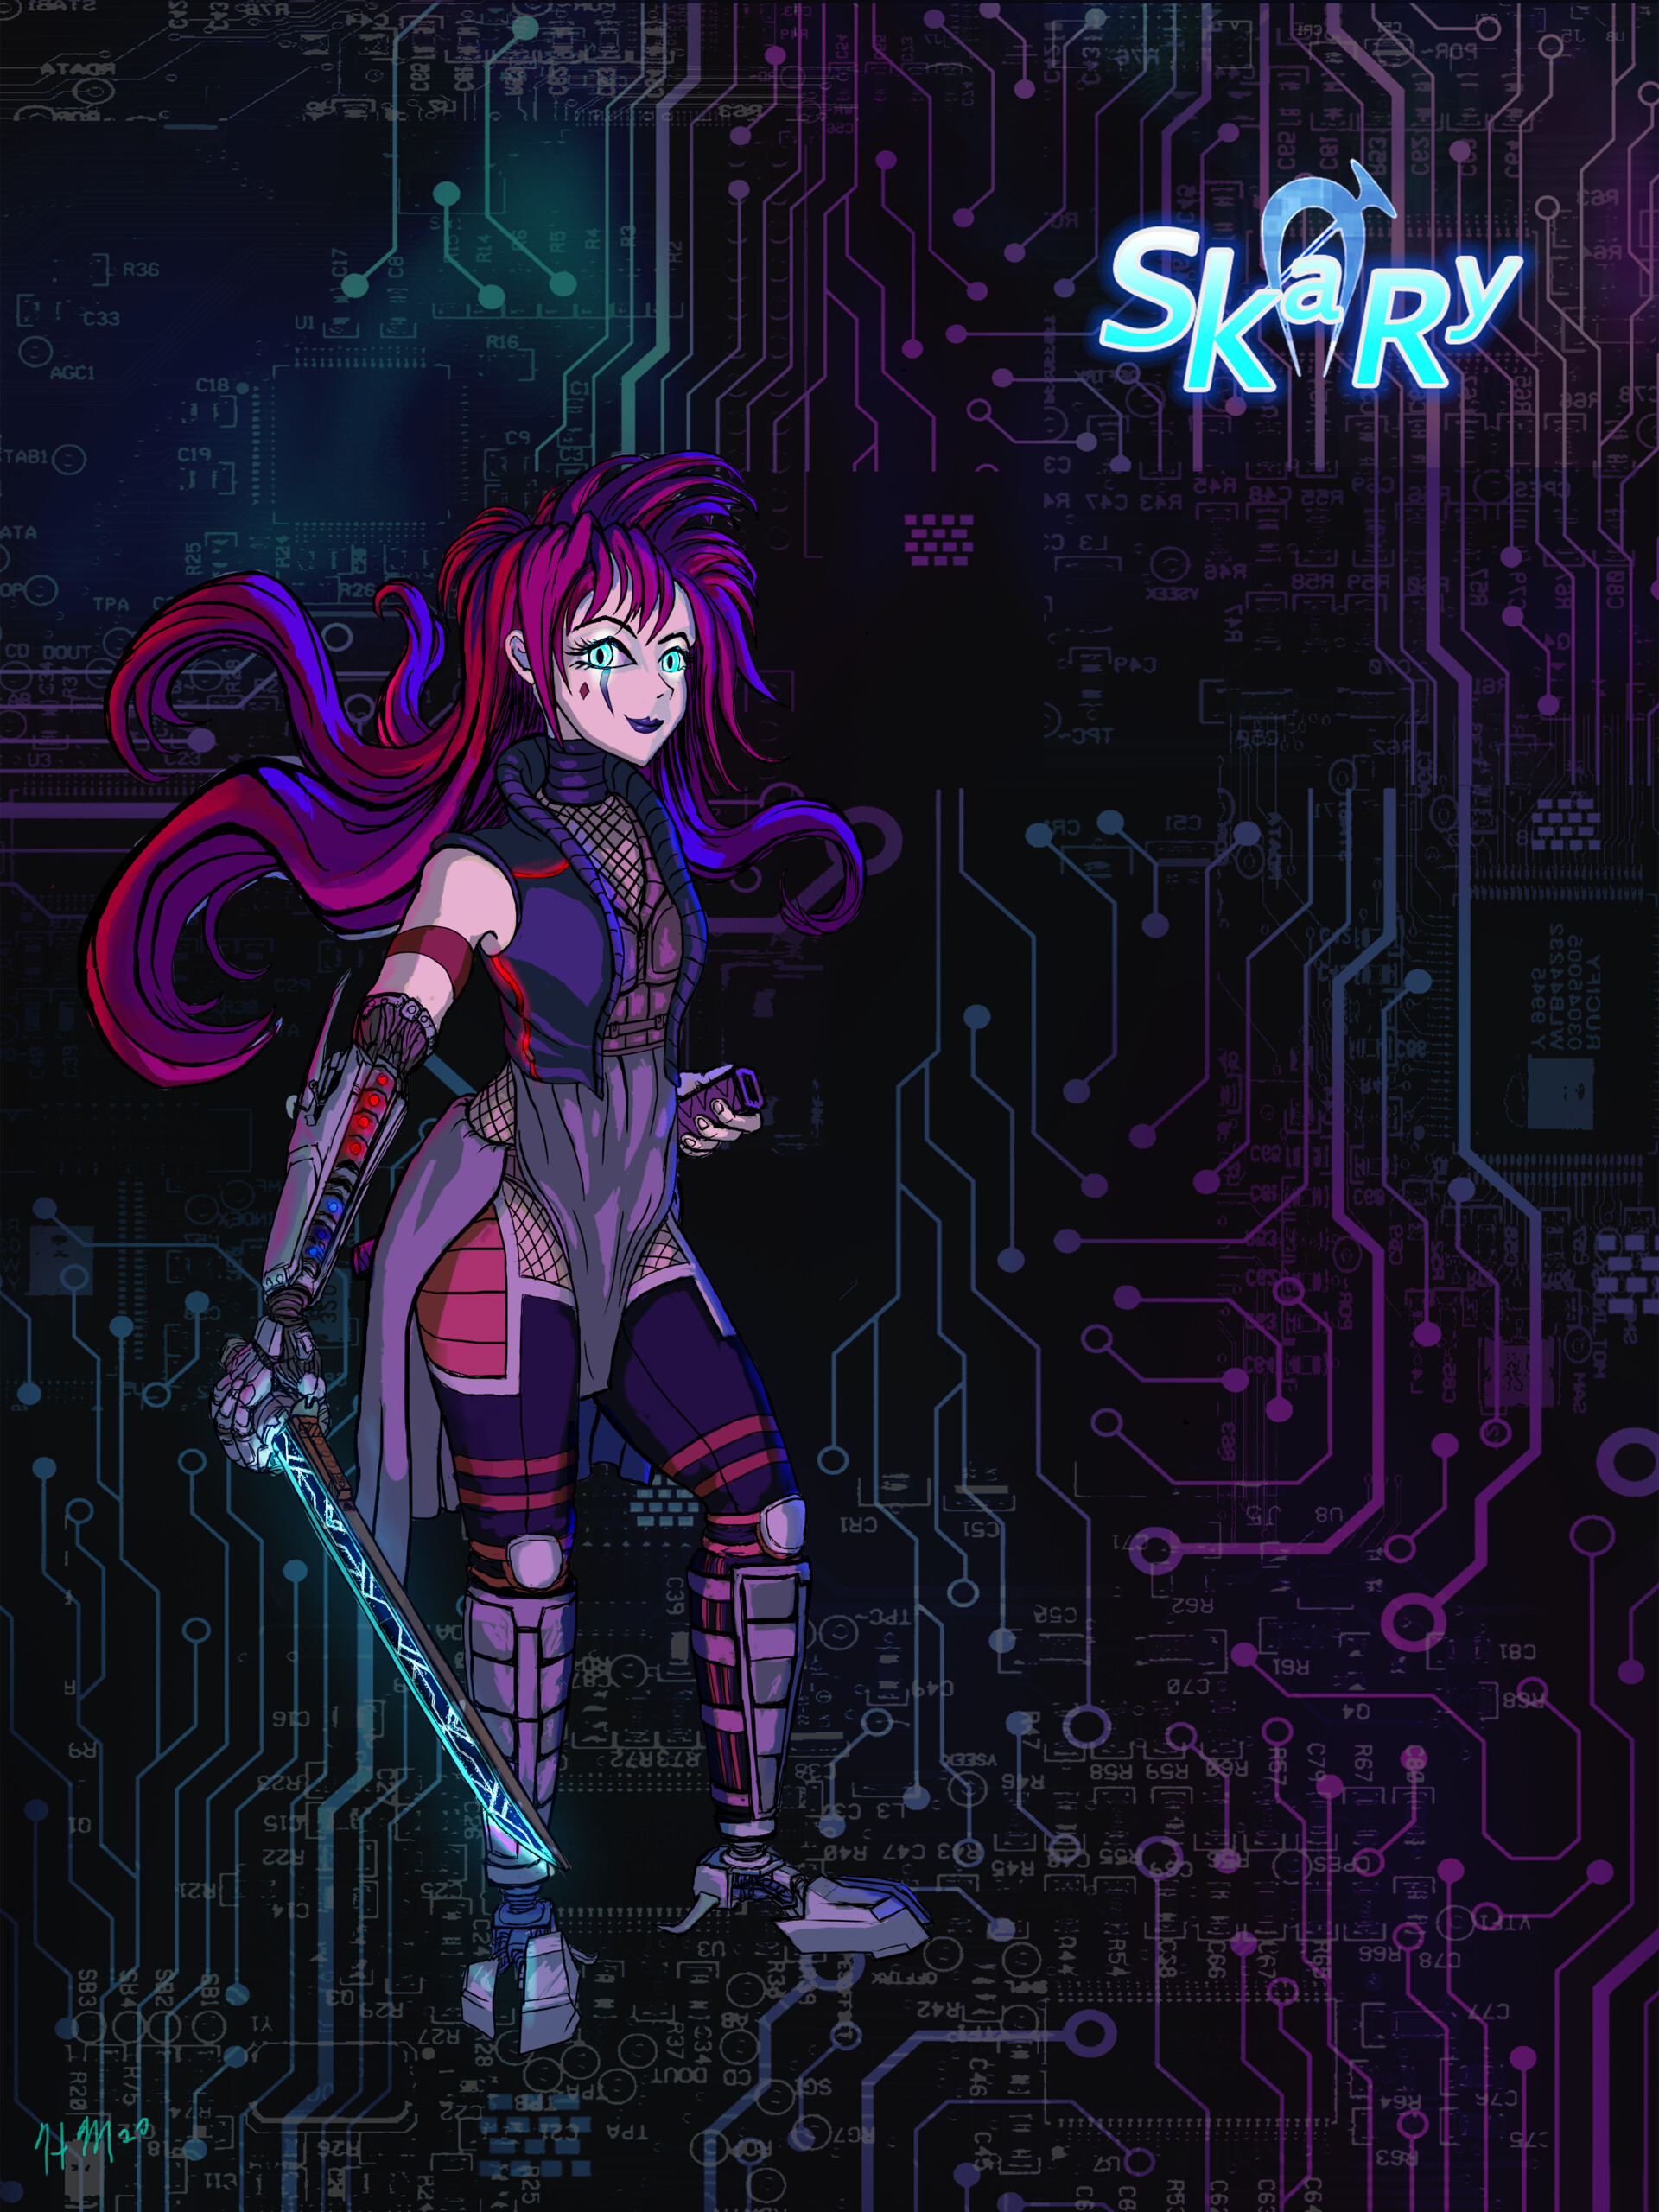 ArtStation - Surrealistic anime cyberpunk